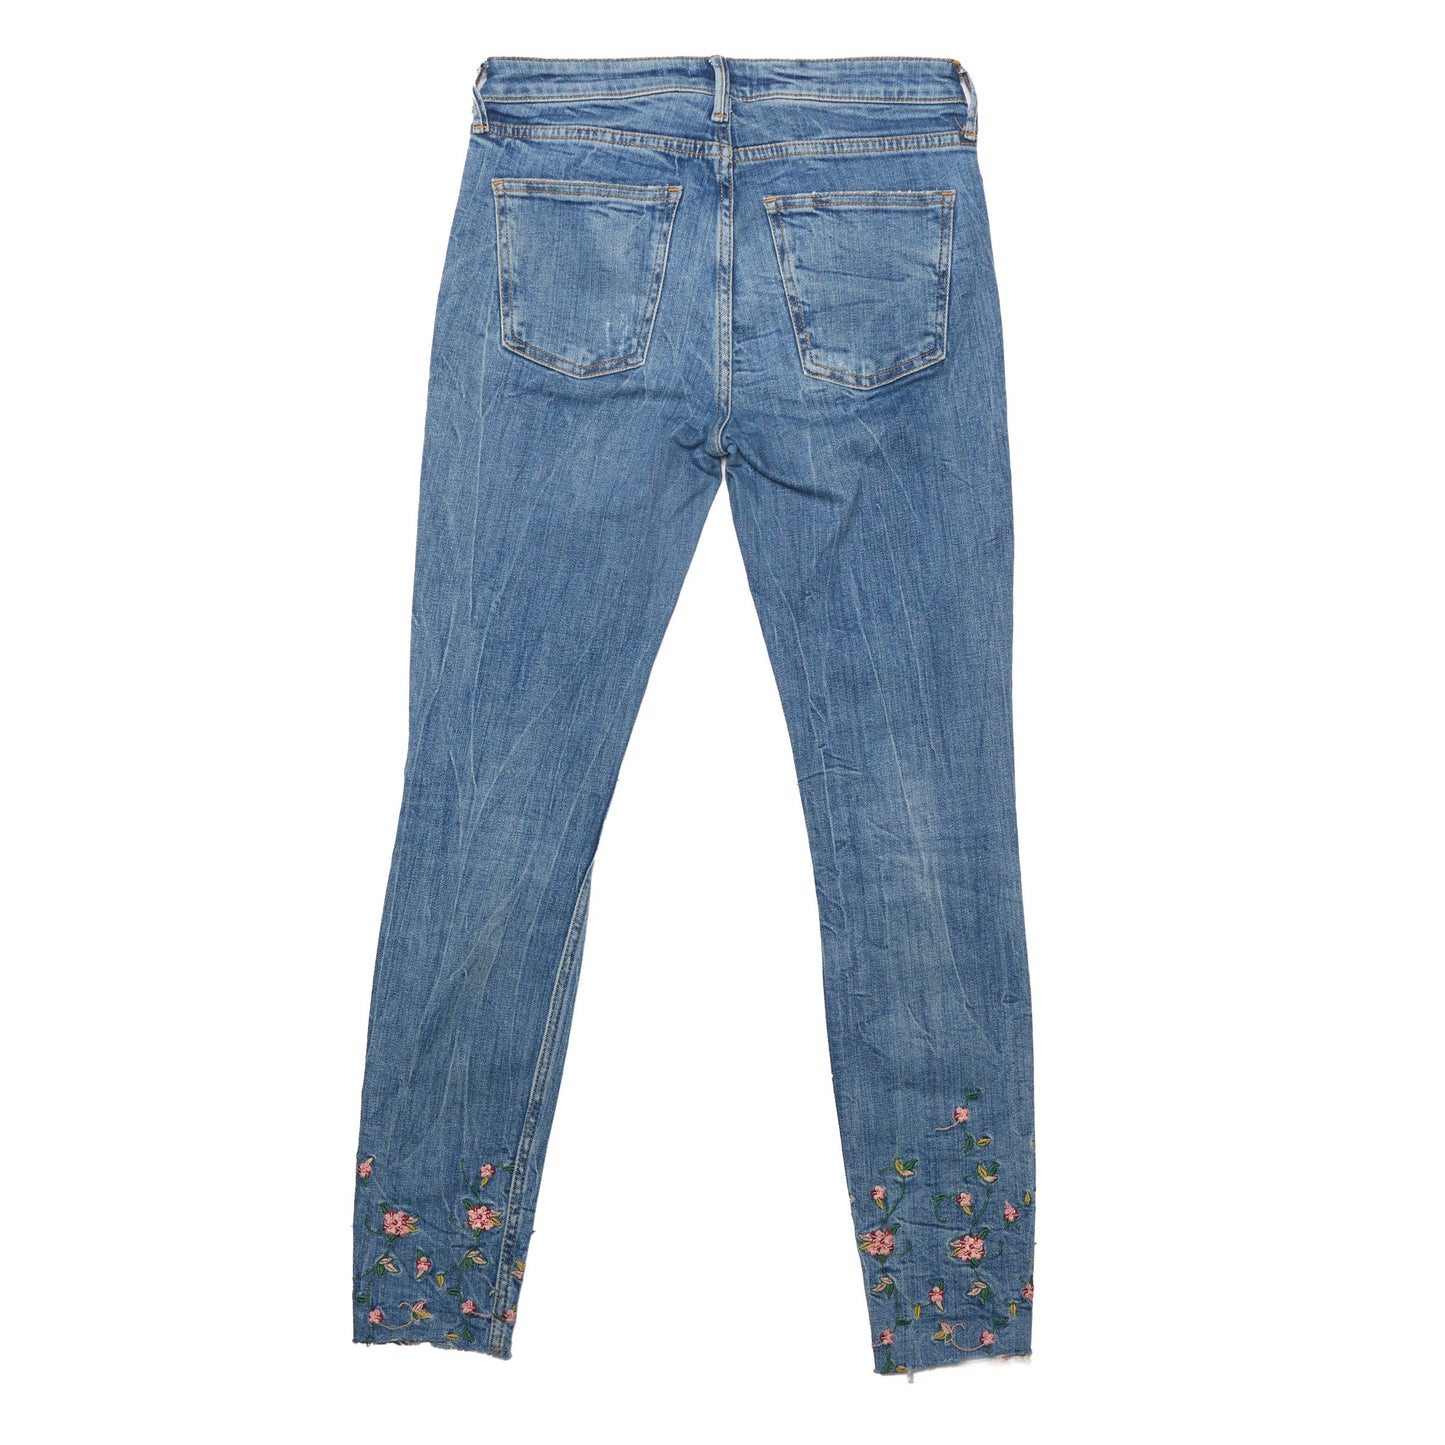 Zara Slim Fit  Flower Jeans - W30" L28"